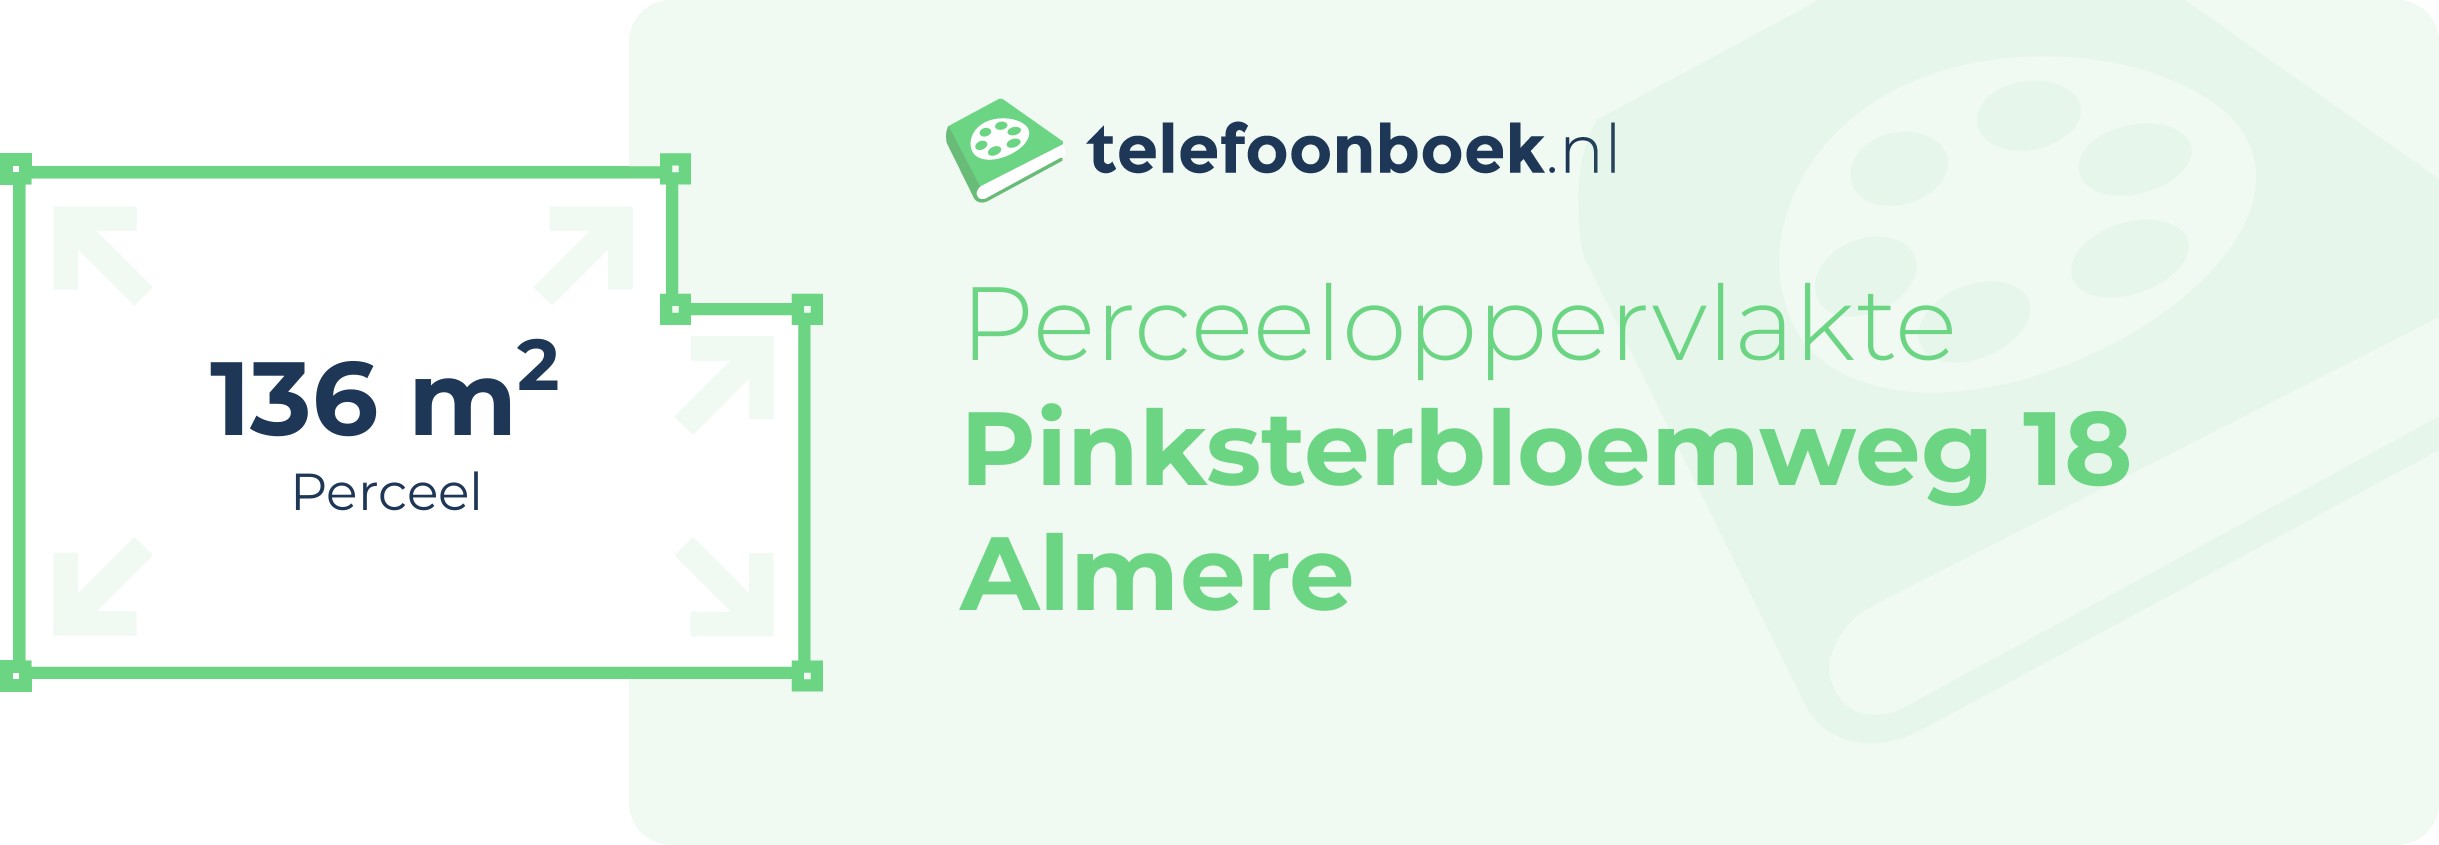 Perceeloppervlakte Pinksterbloemweg 18 Almere